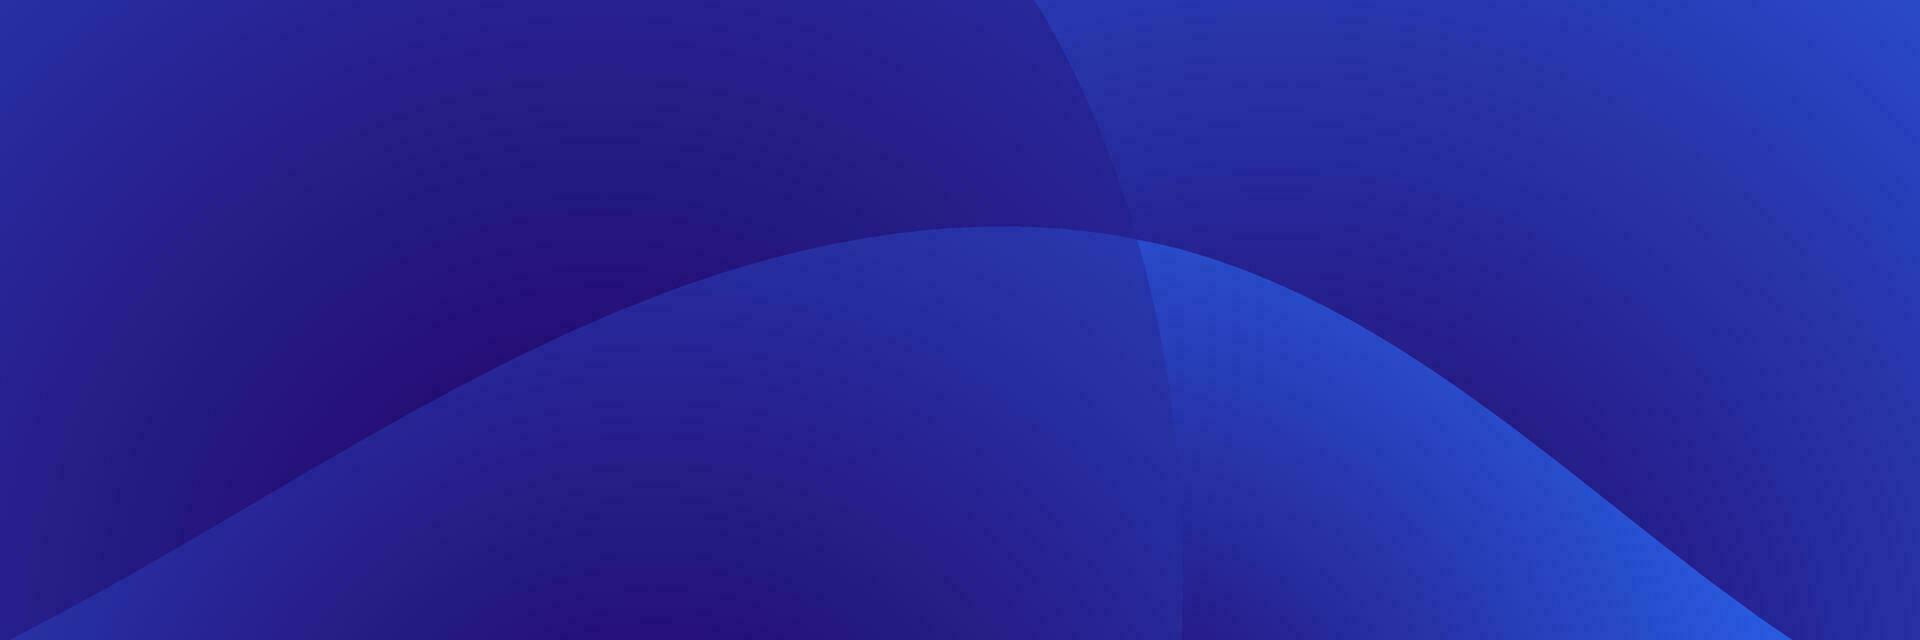 blue gradient wave background vector